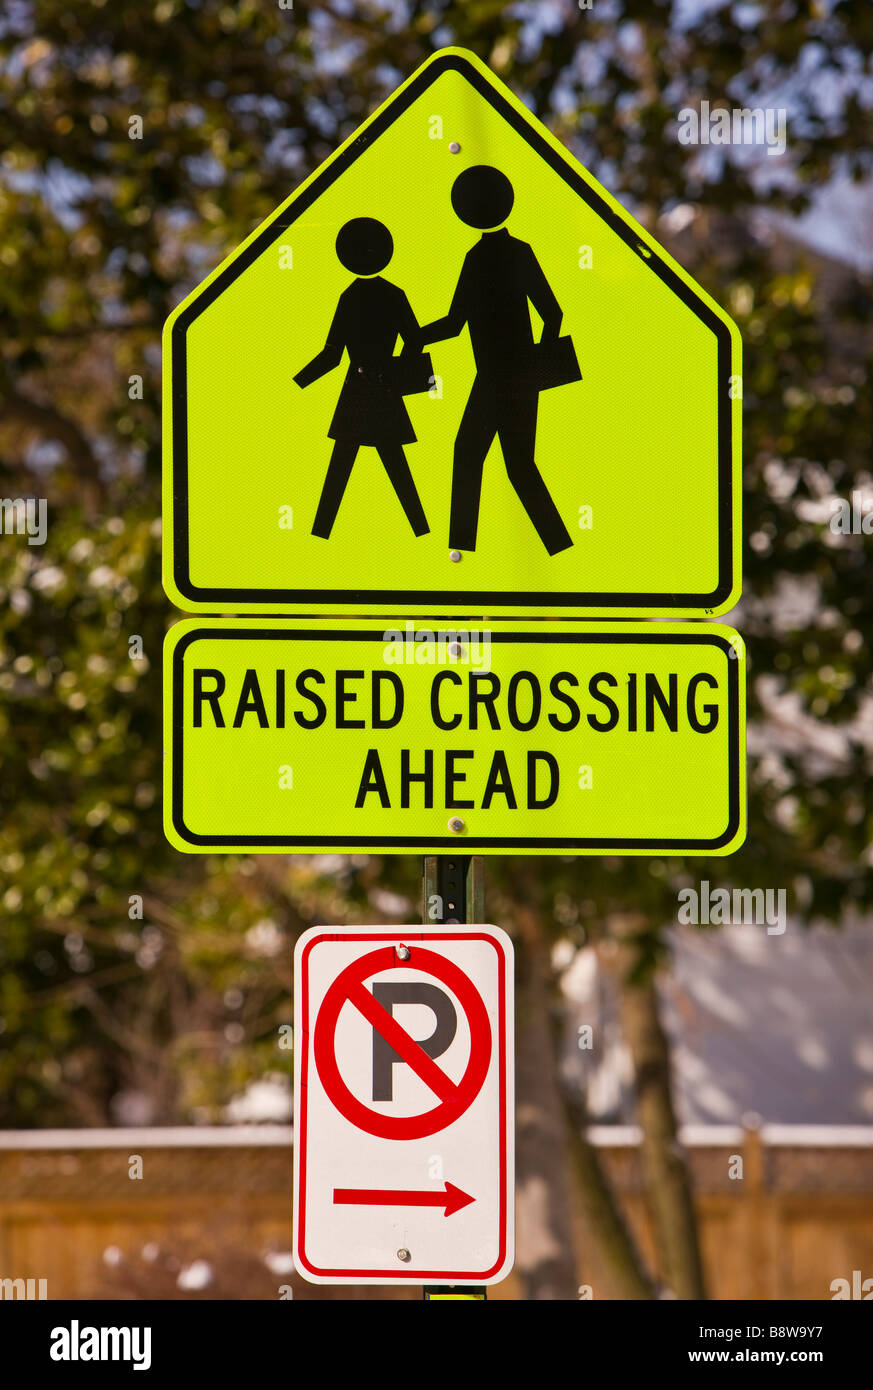 ARLINGTON VIRGINIA USA Pedestrian crossing traffic sign Stock Photo